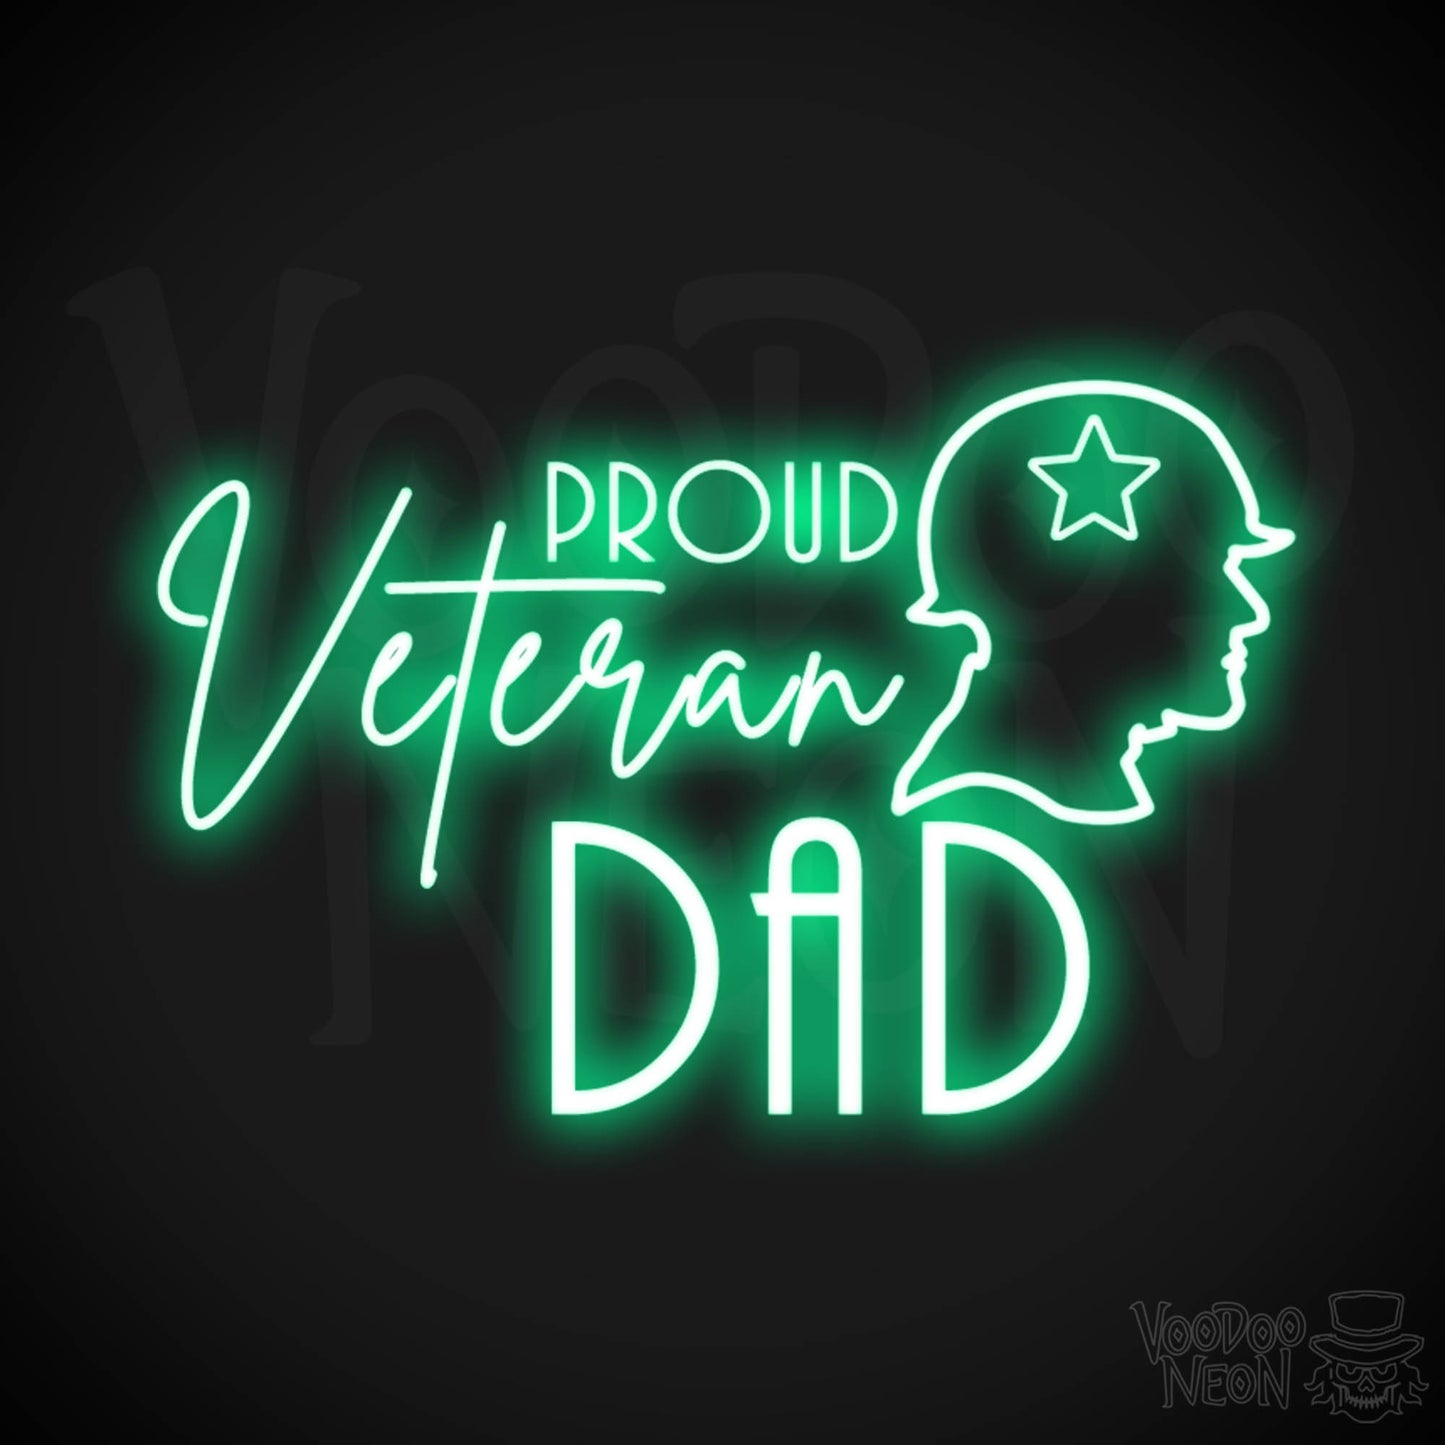 Proud Veteran Dad Neon Sign - Proud Veteran Dad Sign - Neon Veteran Wall Art - Color Green